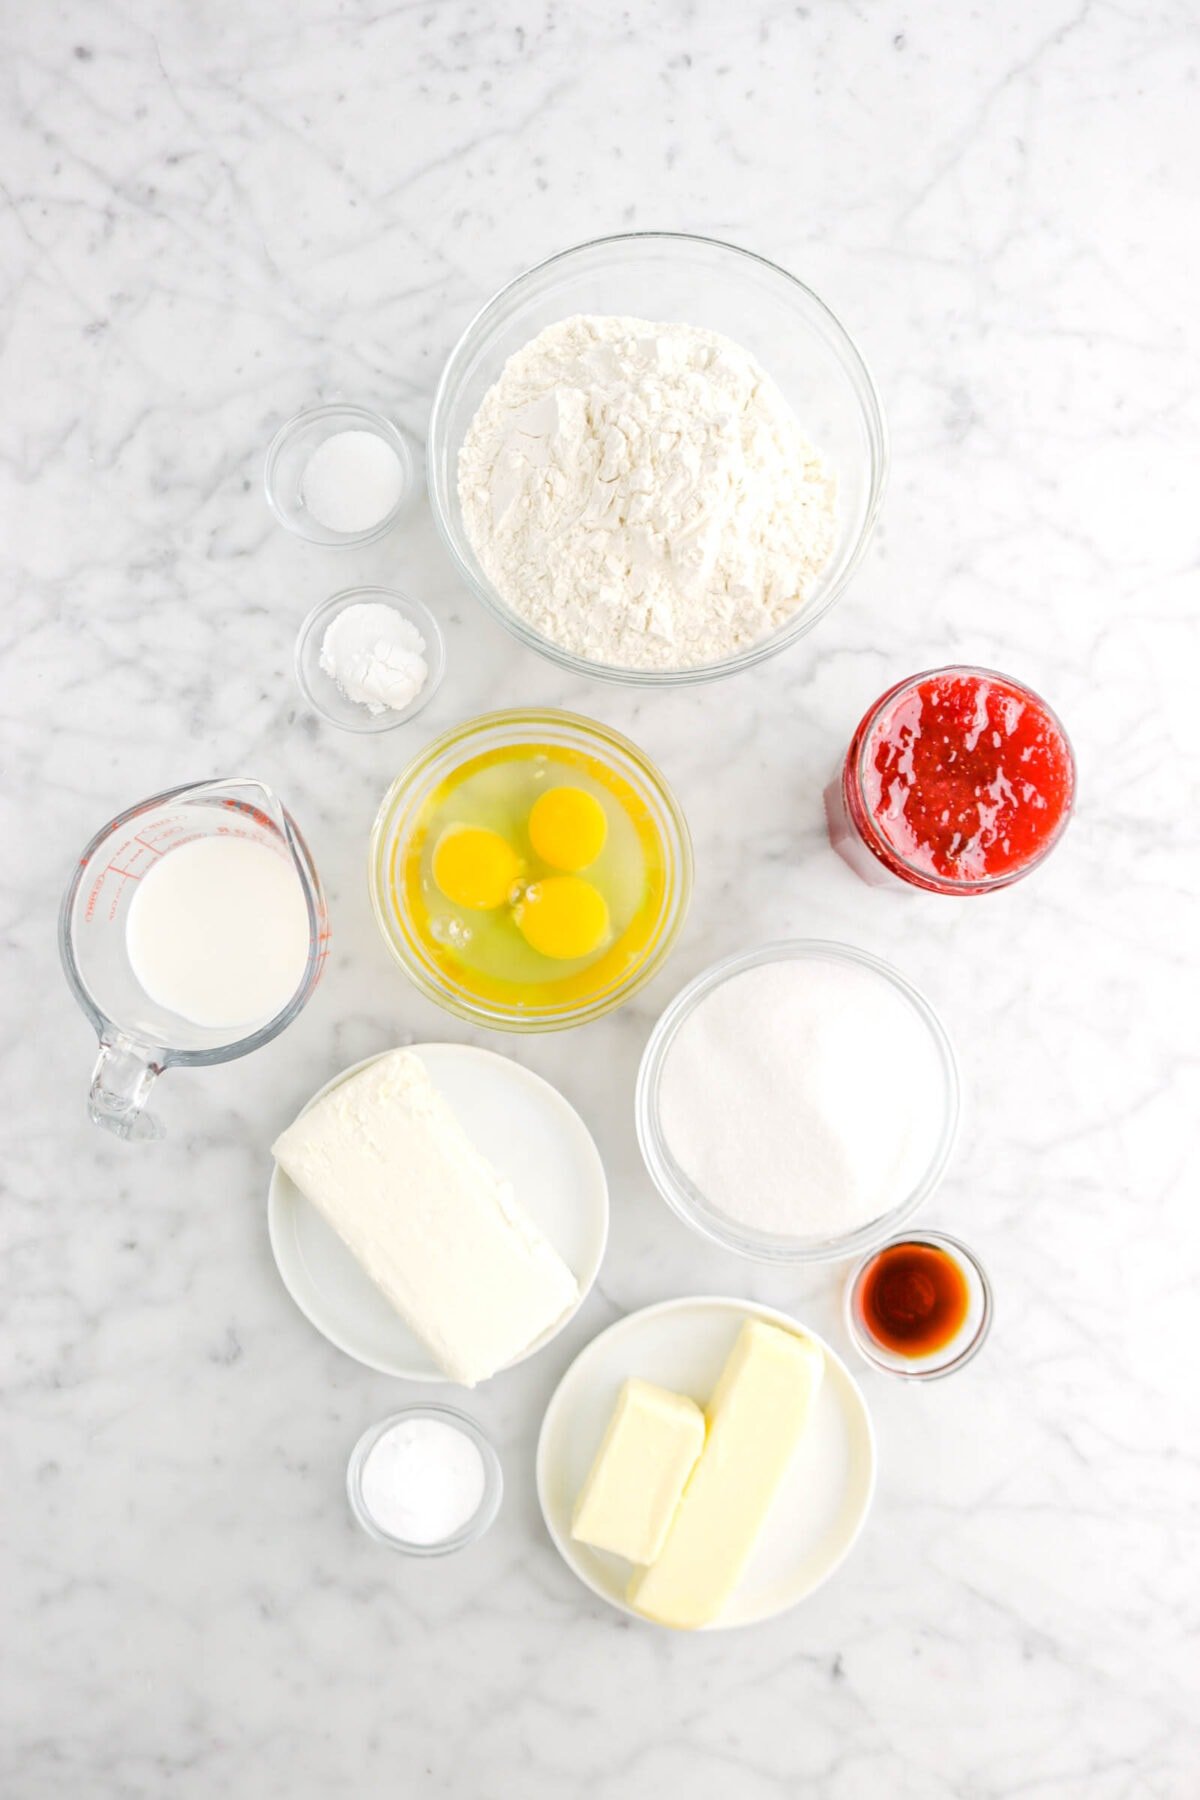 flour, baking powder, baking soda, eggs, milk cream cheese, sugar, strawberry jam, vanilla, butter, cream cheese, and salt on marble surface